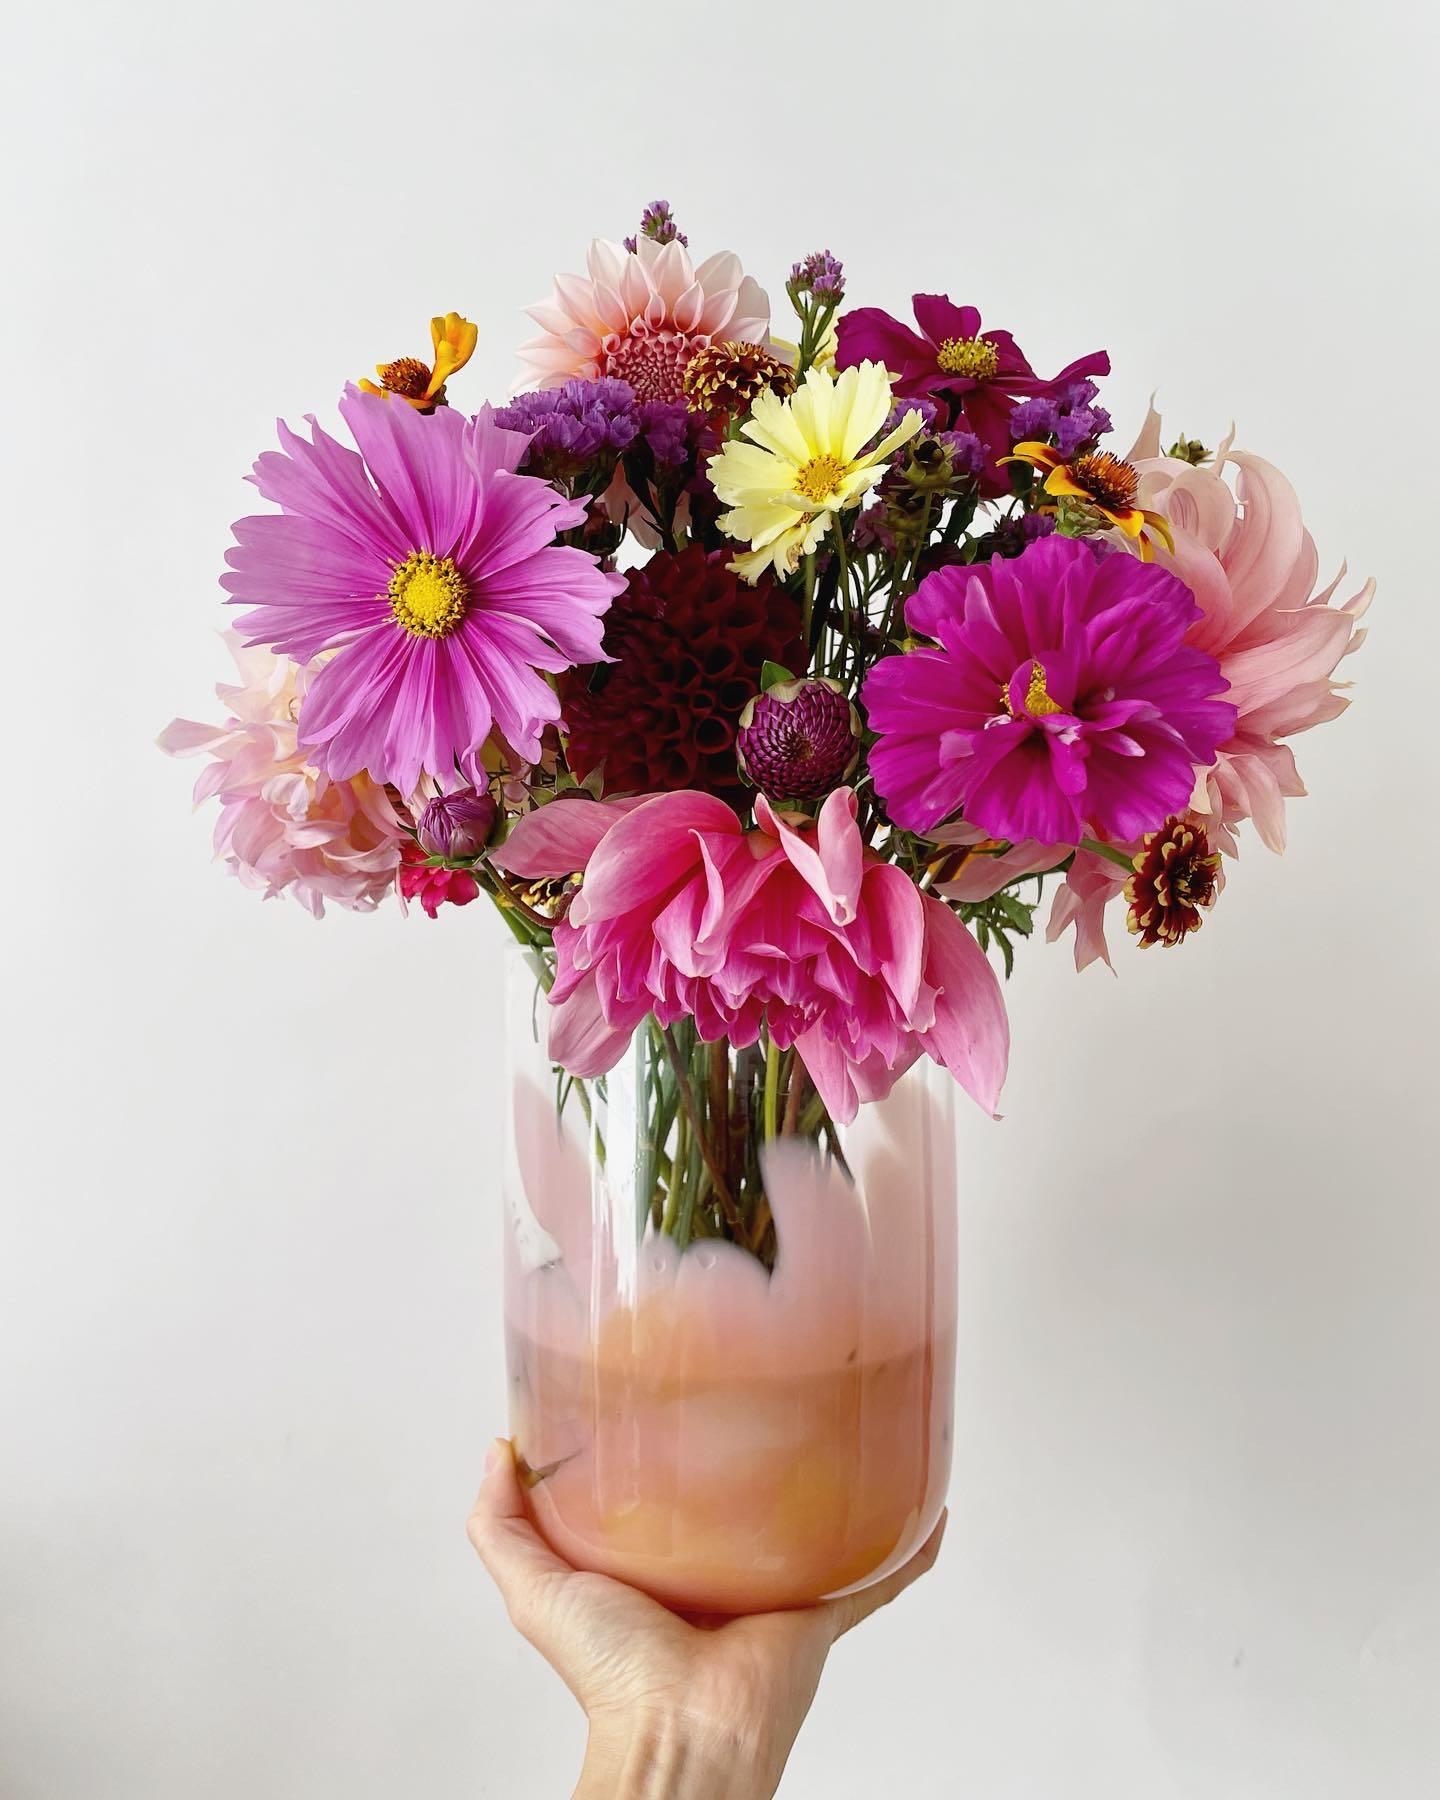 #fallflowers # slowflowers #colorful #october #fall #flowers #interior #decoration #freshflowers @Studiobloom_design